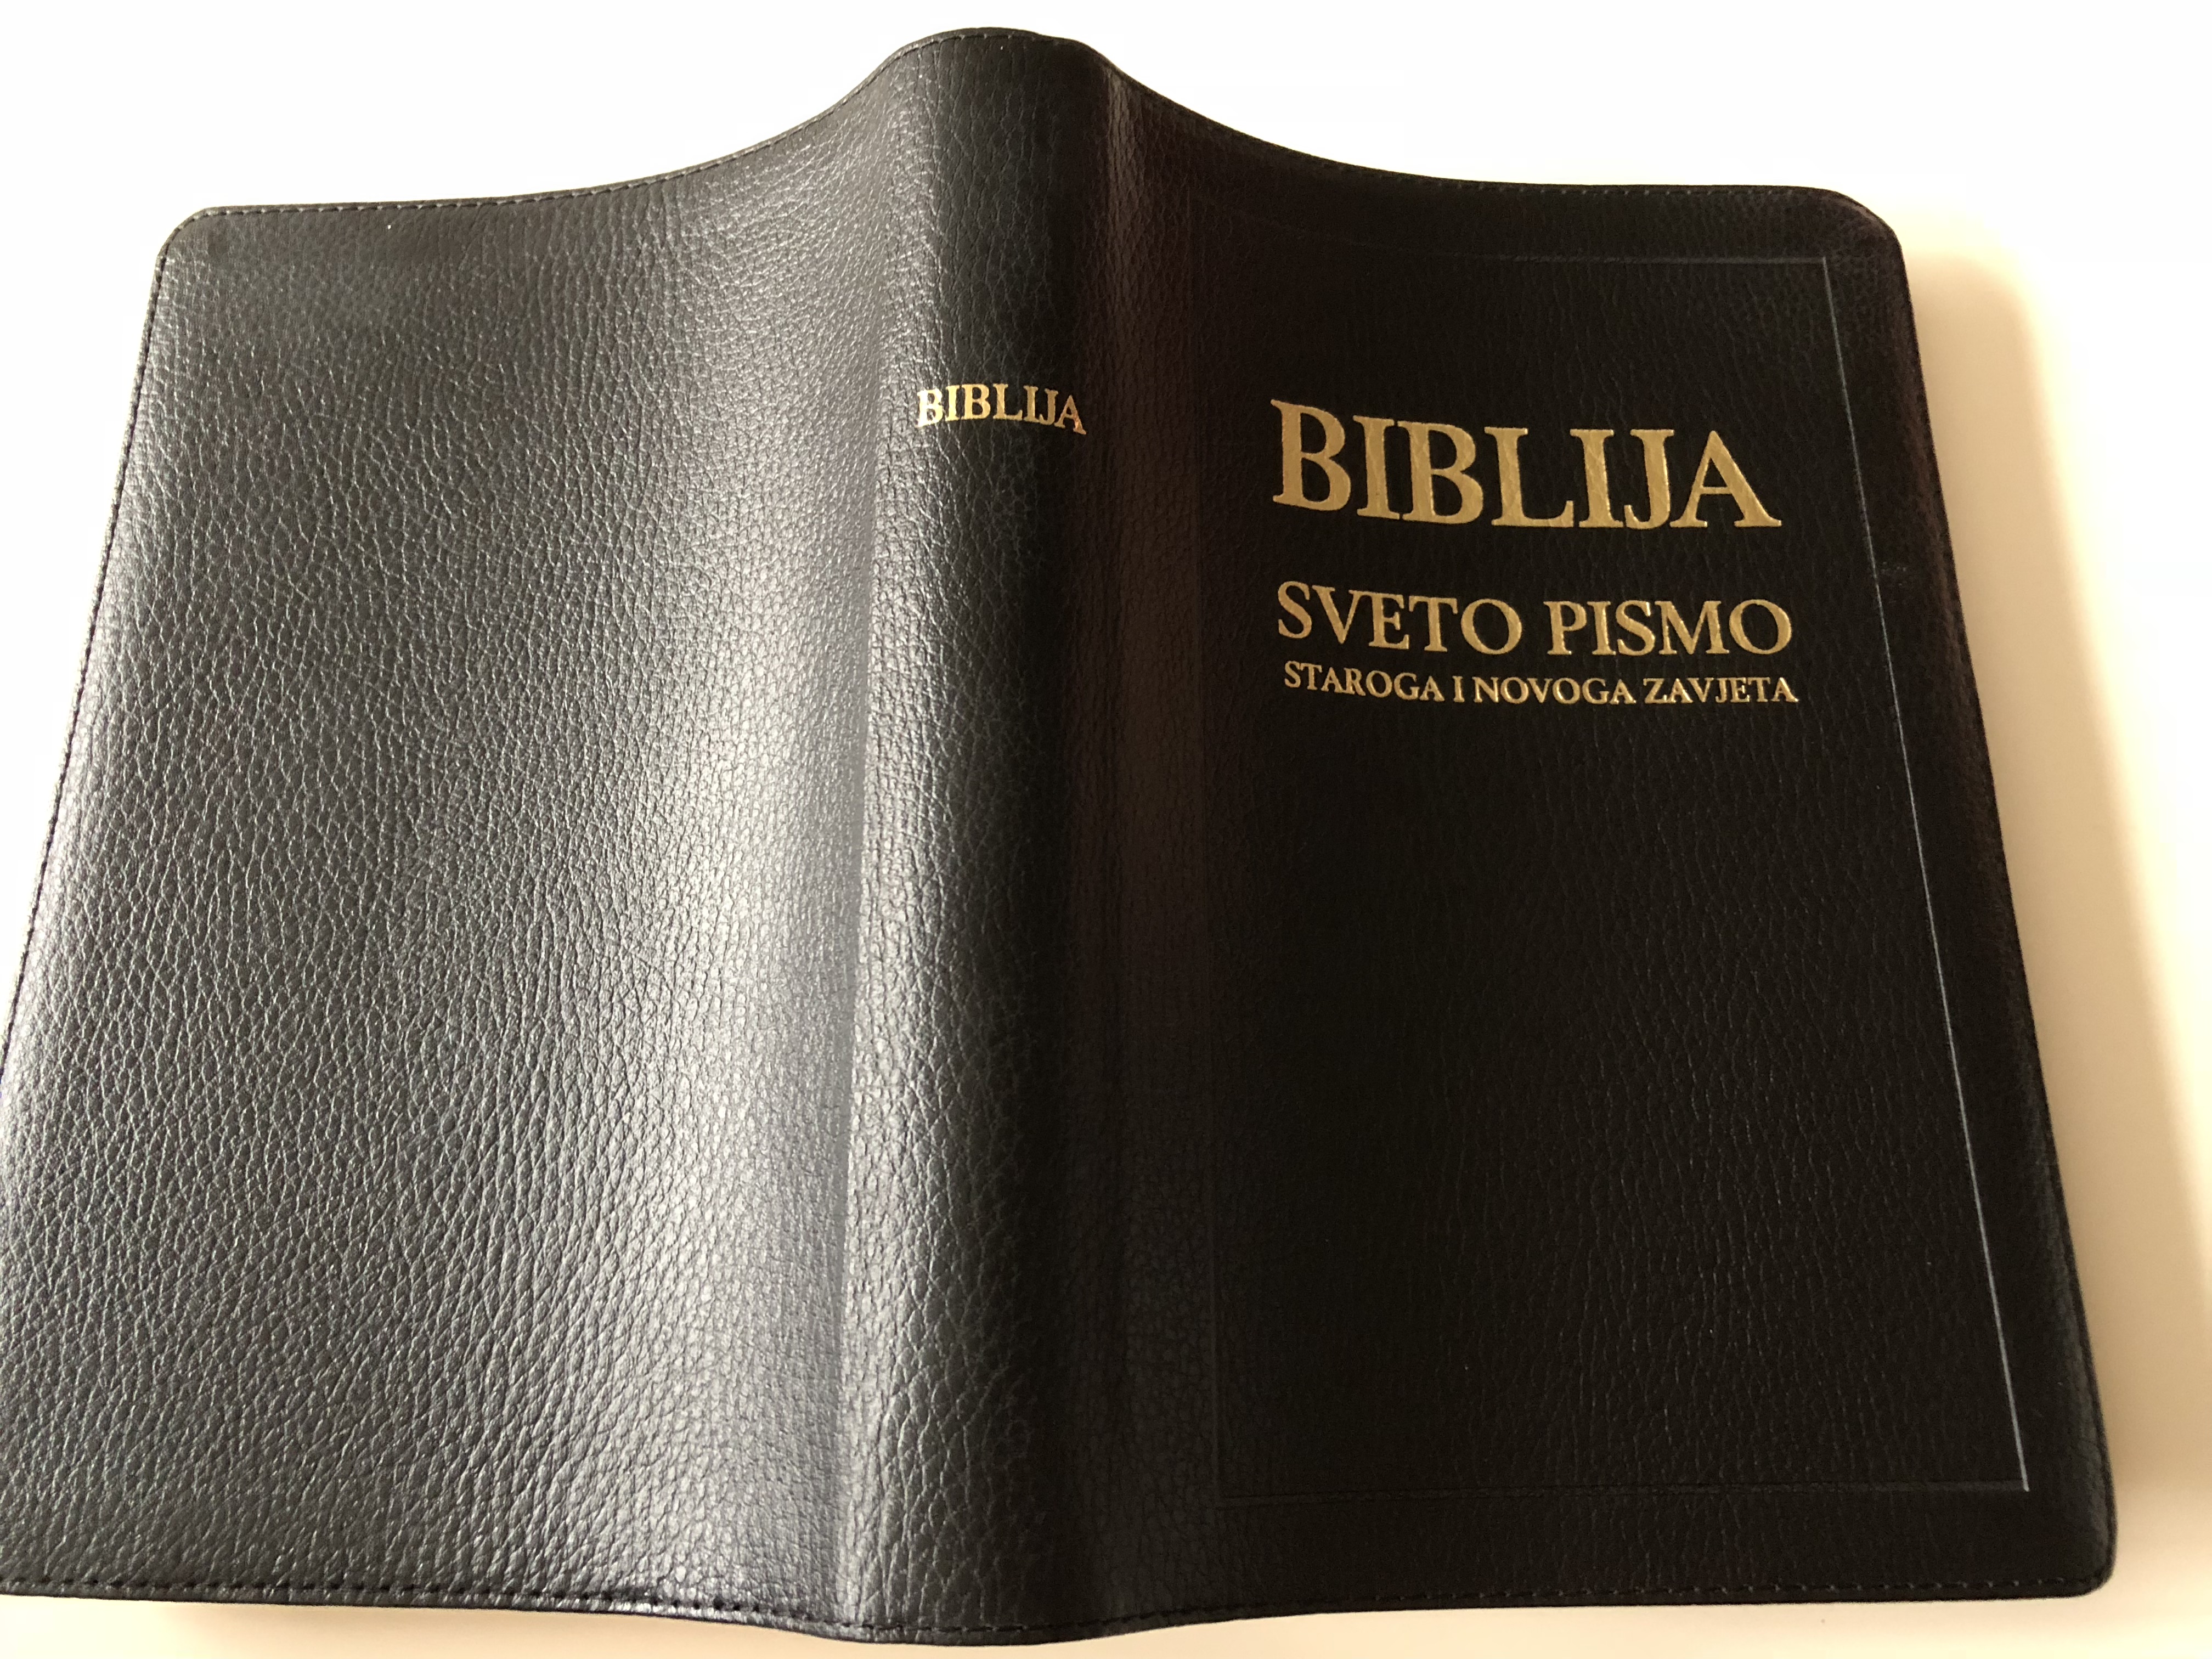 biblija-sveto-pismo-holy-bible-in-croatian-language-leather-bound-black-golden-edges-and-thumb-index-6-.jpg